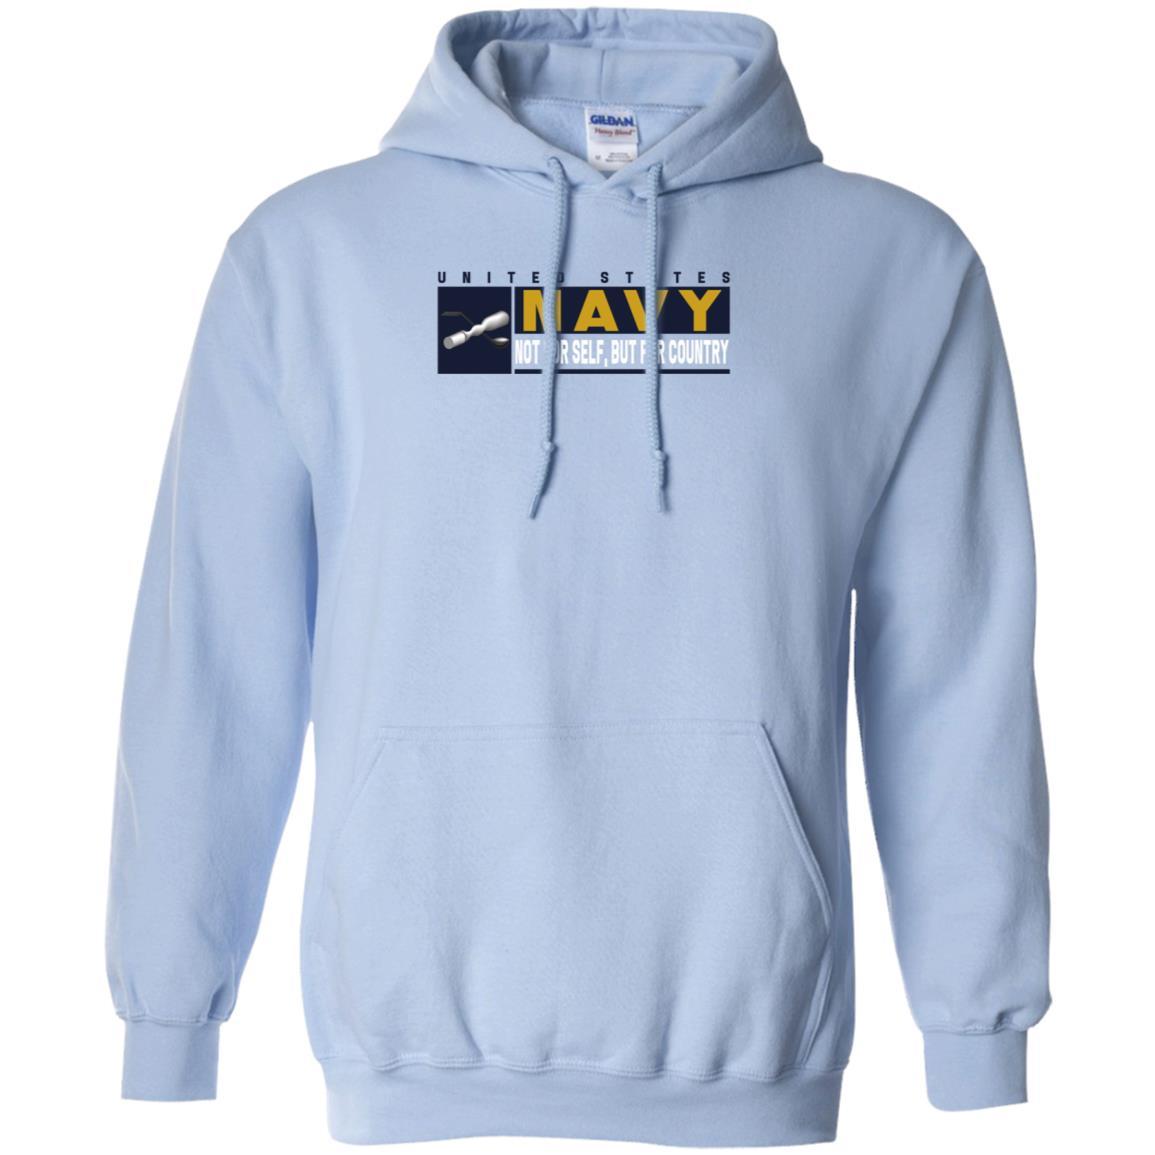 Navy Molder Navy ML- Not for self Long Sleeve - Pullover Hoodie-TShirt-Navy-Veterans Nation